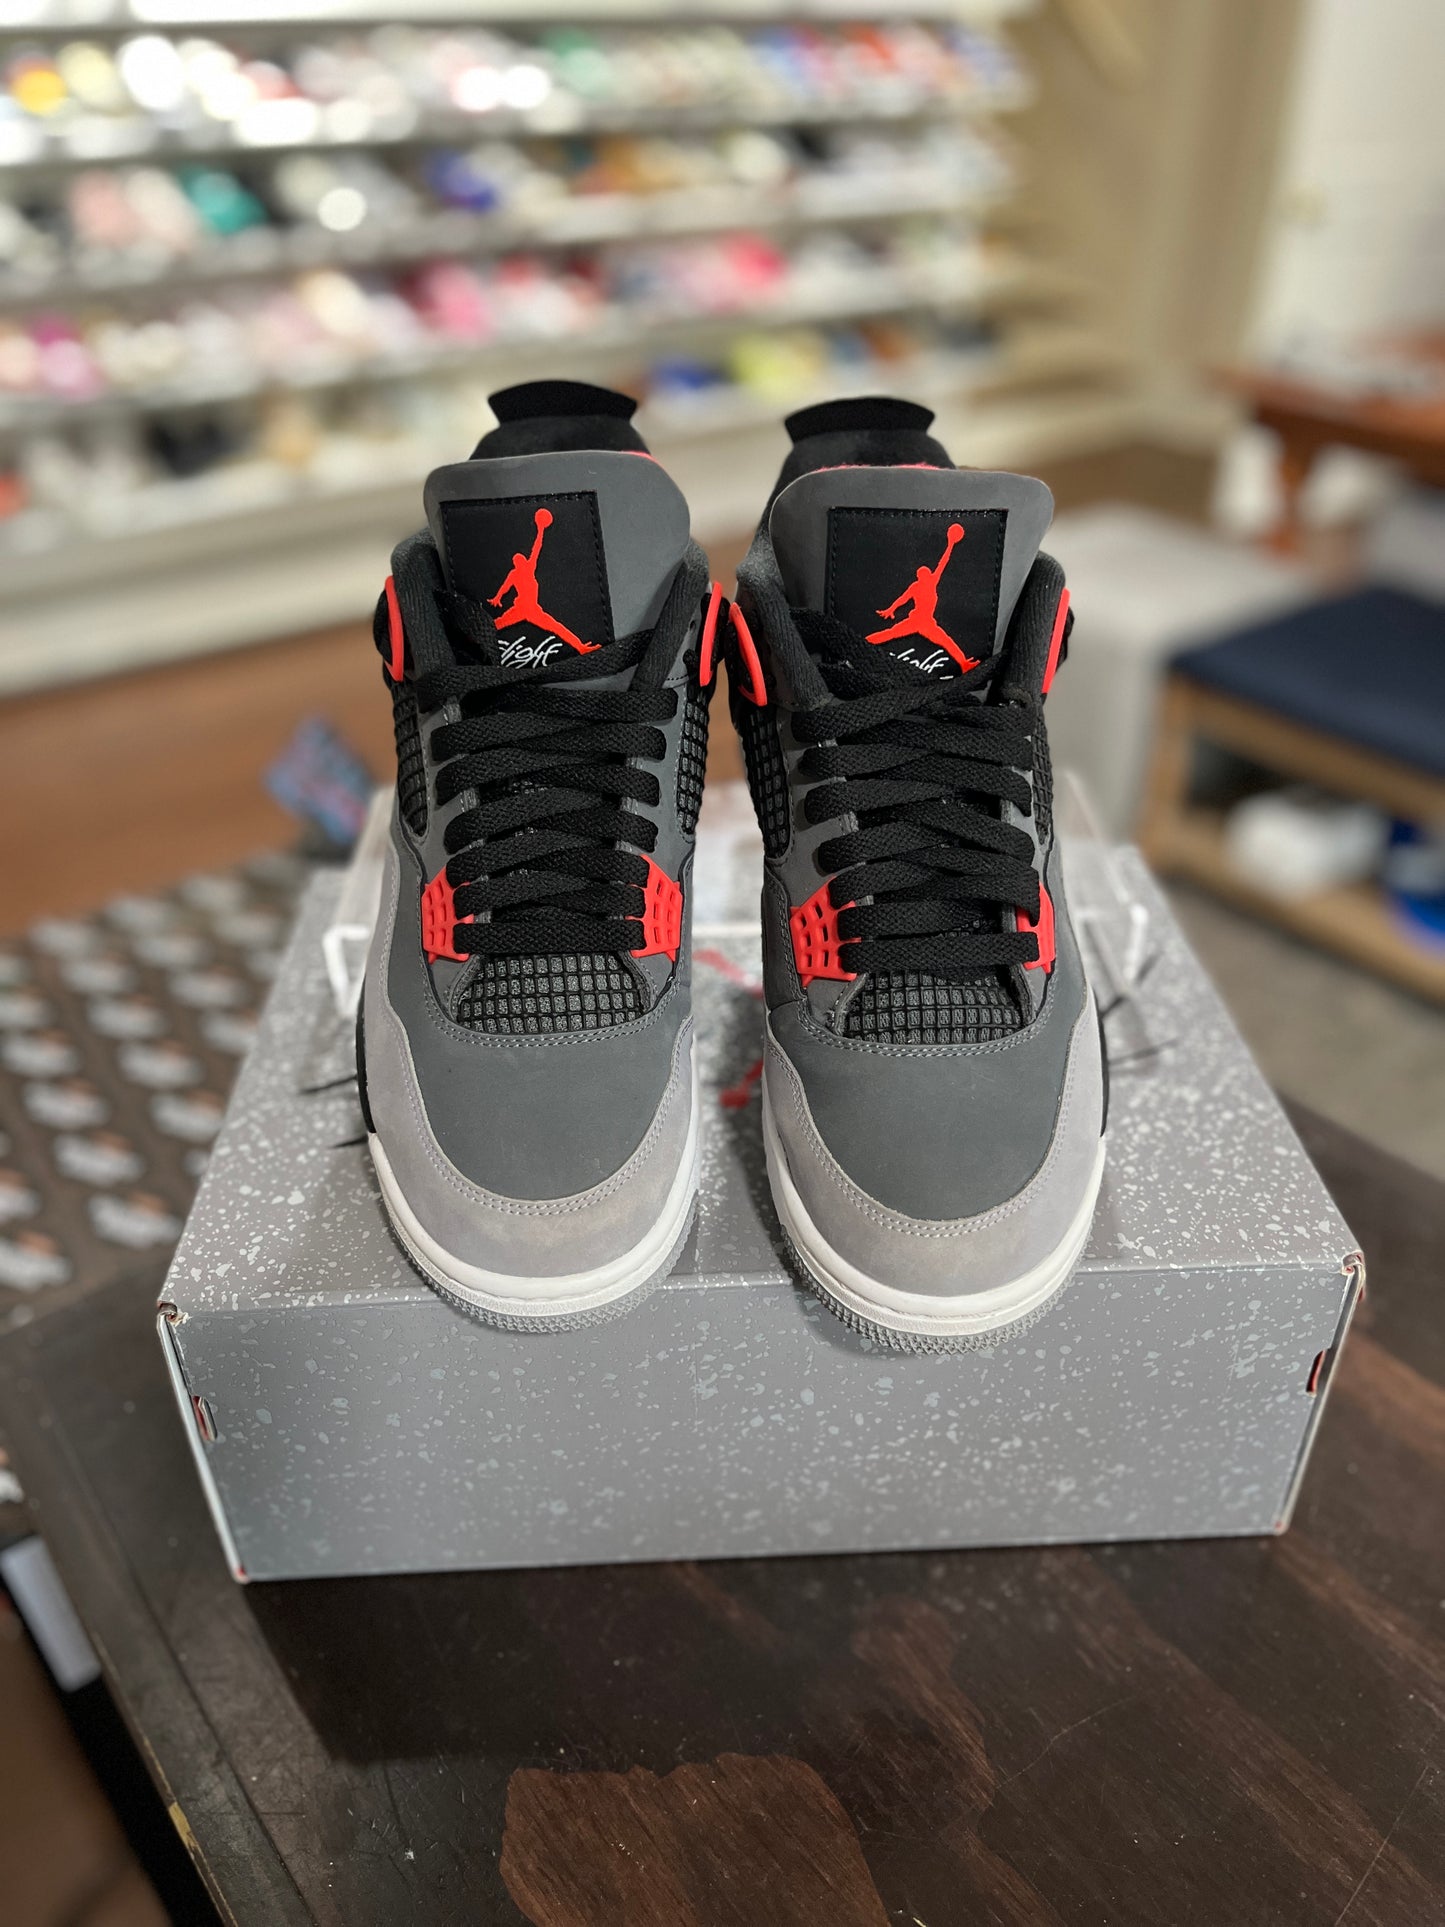 *USED* Air Jordan 4 Infrared (size 9)